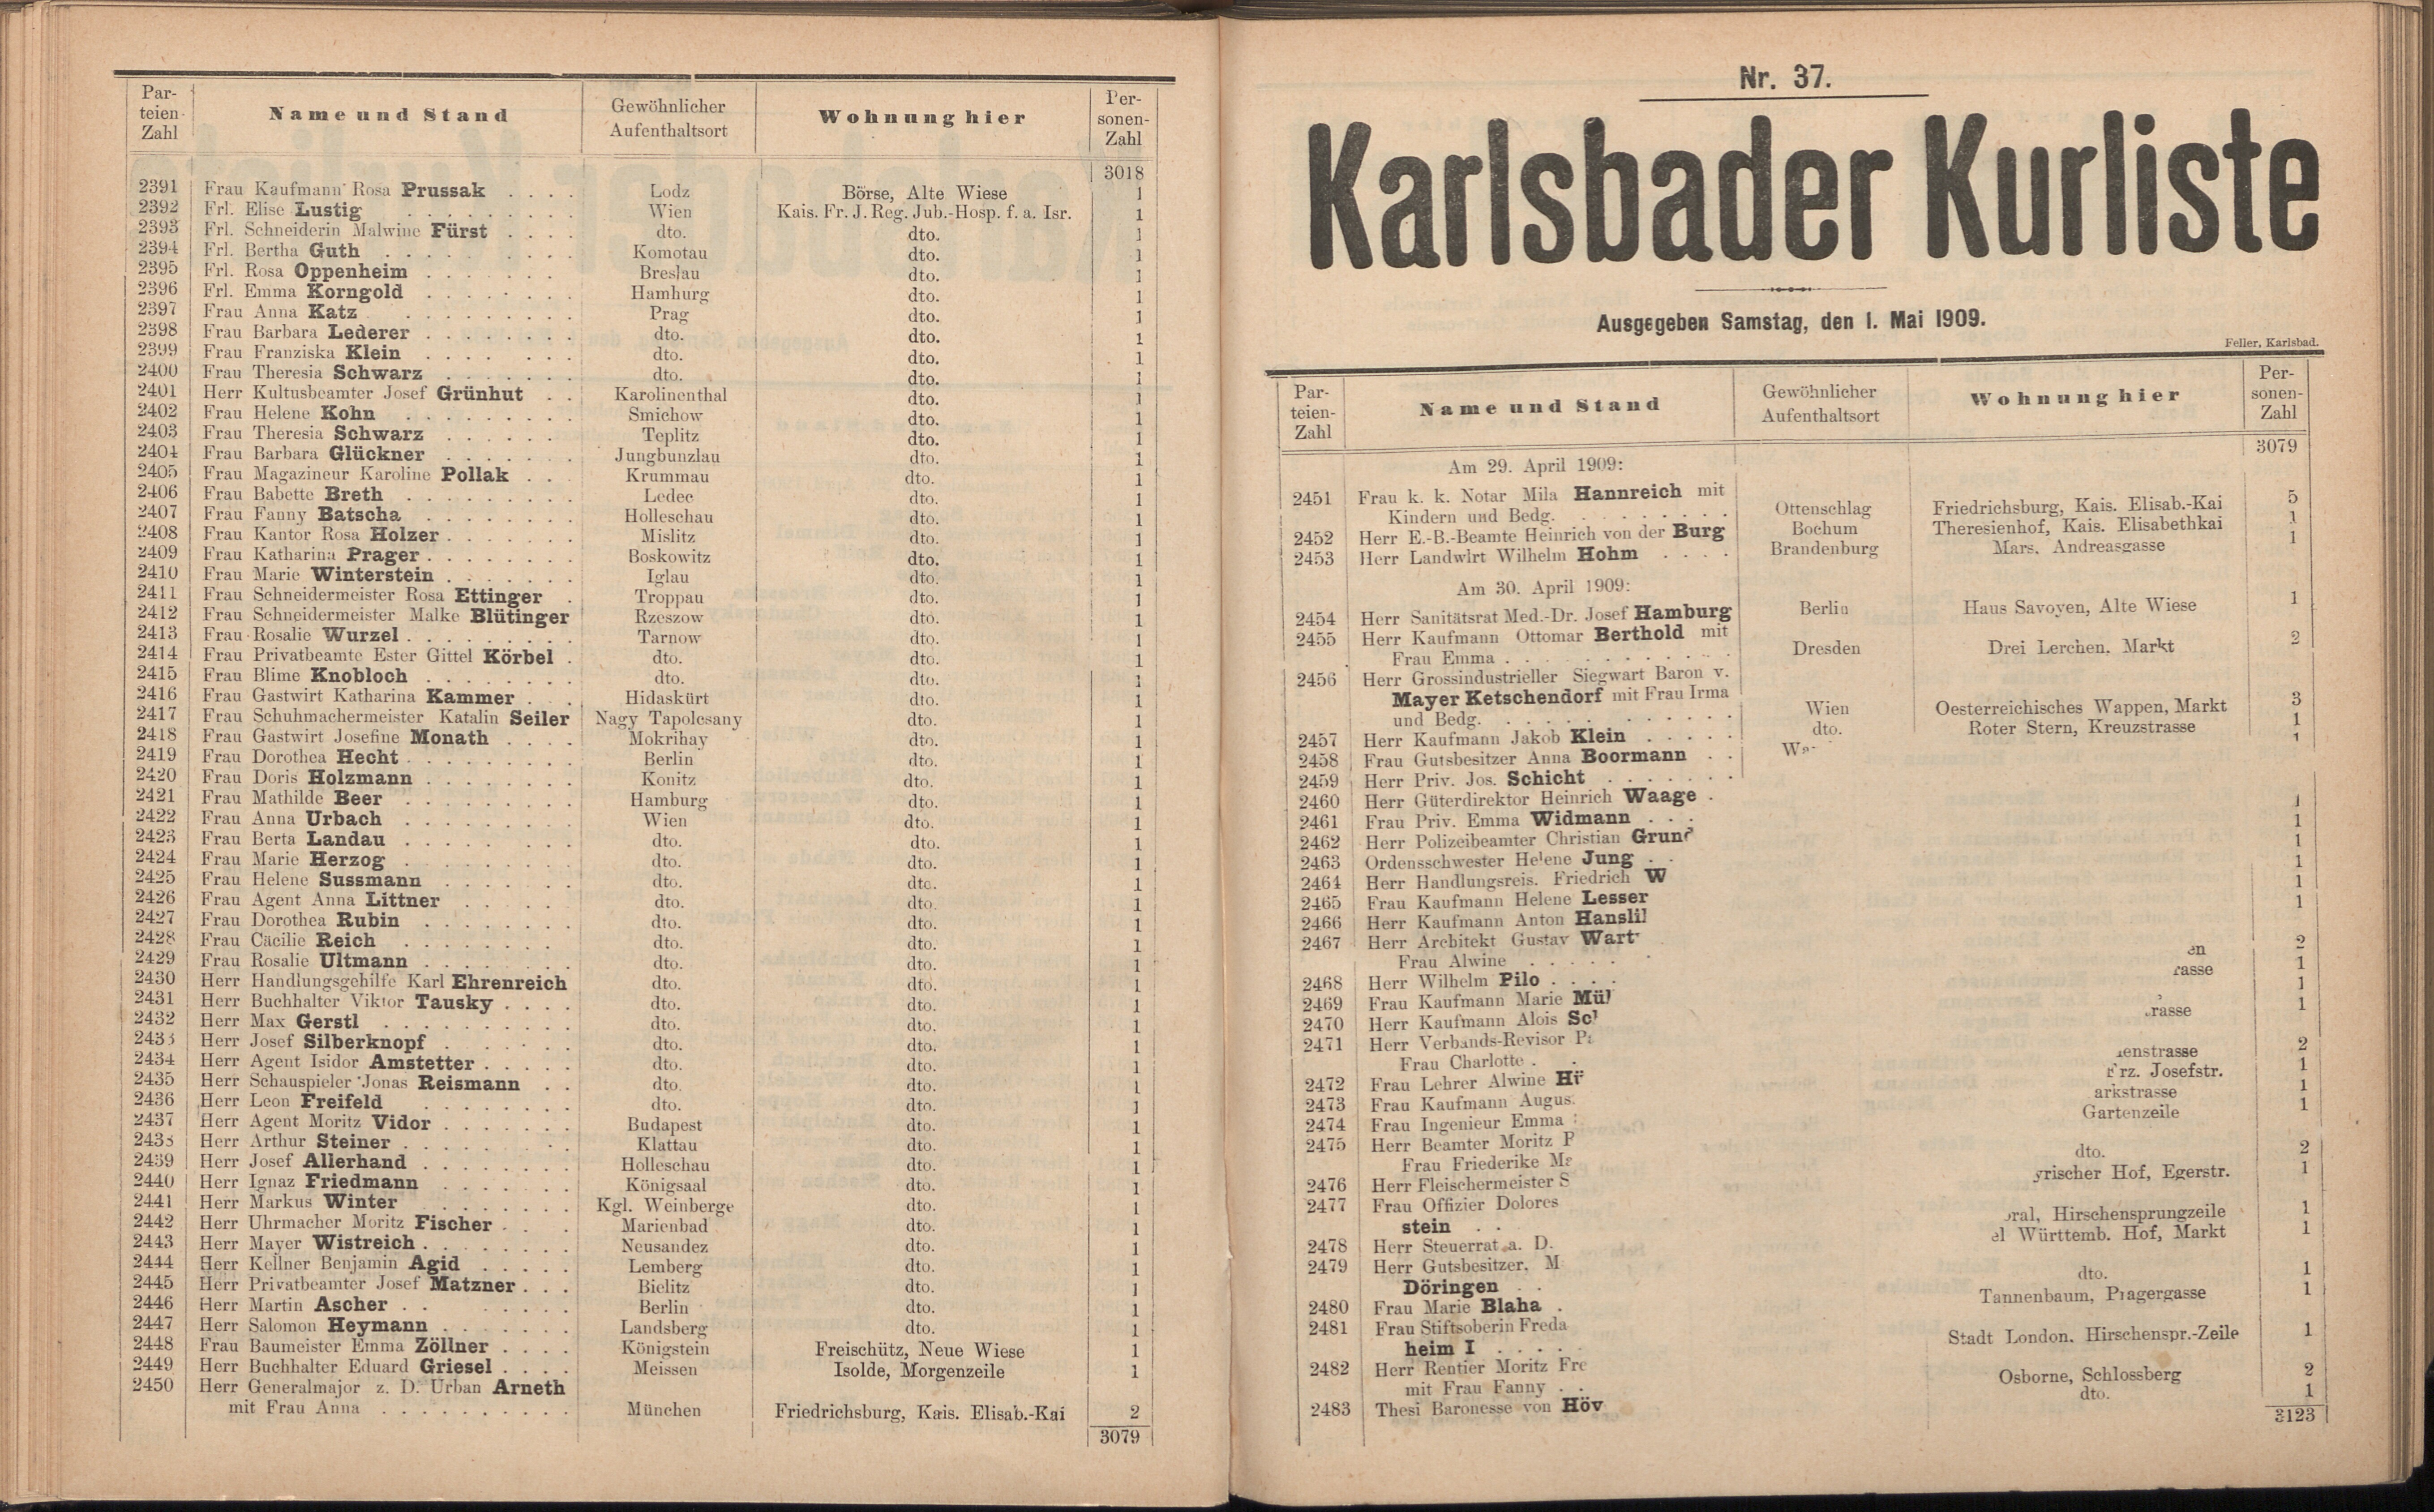 153. soap-kv_knihovna_karlsbader-kurliste-1909_1530